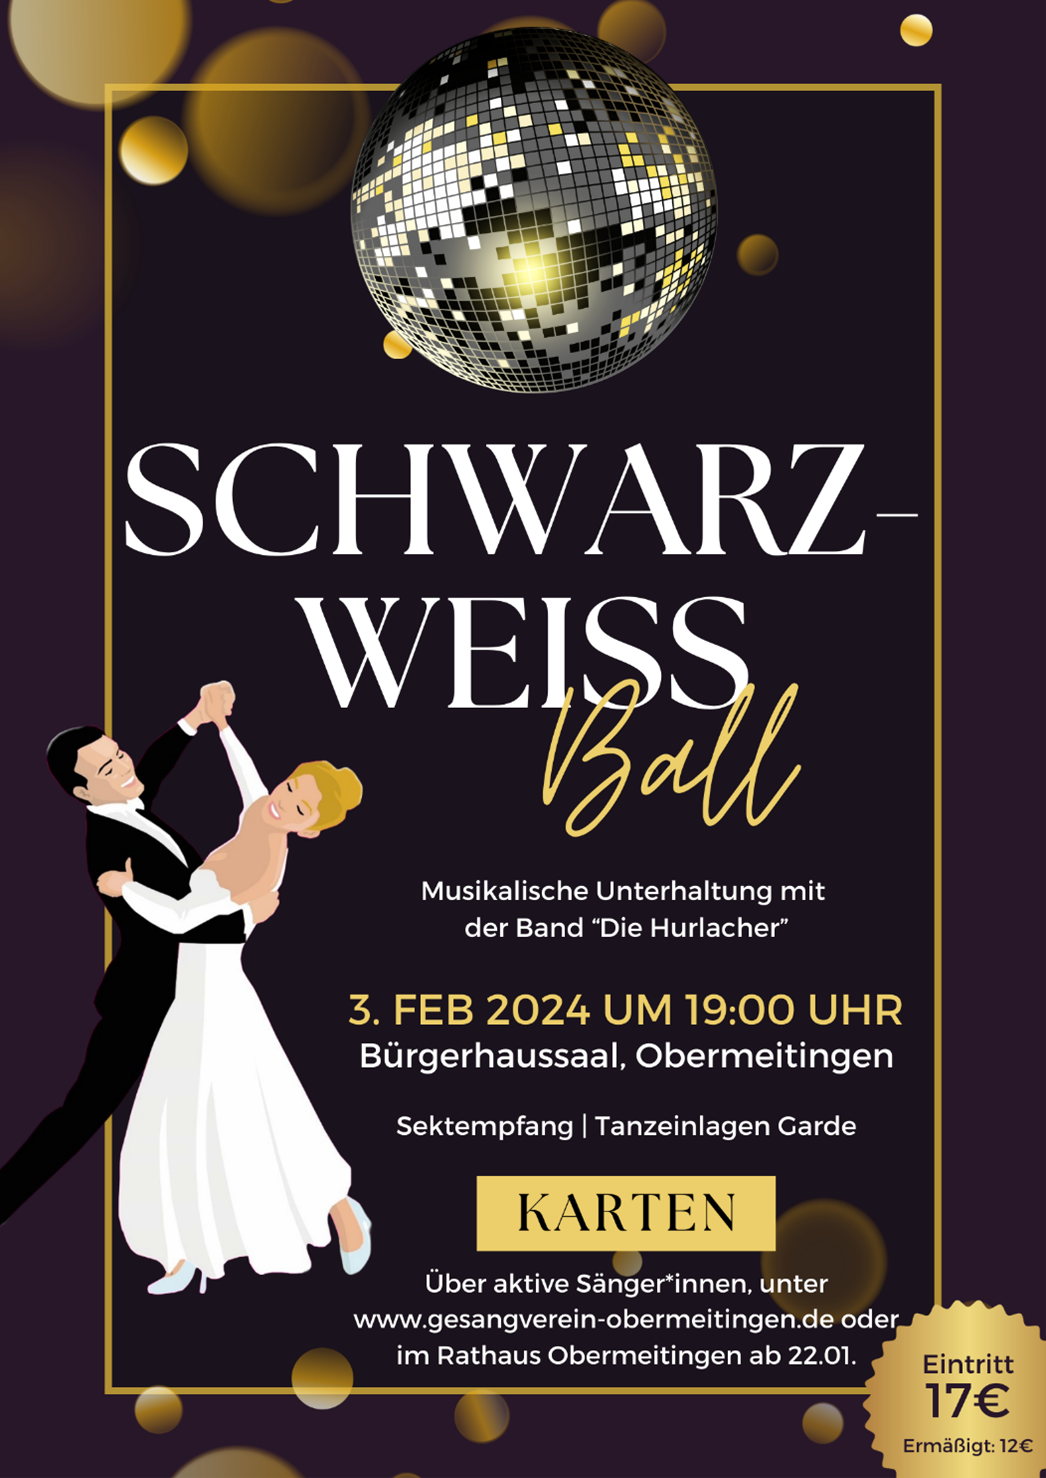 Schwarz-Weiss-Ball in Obermeitingen